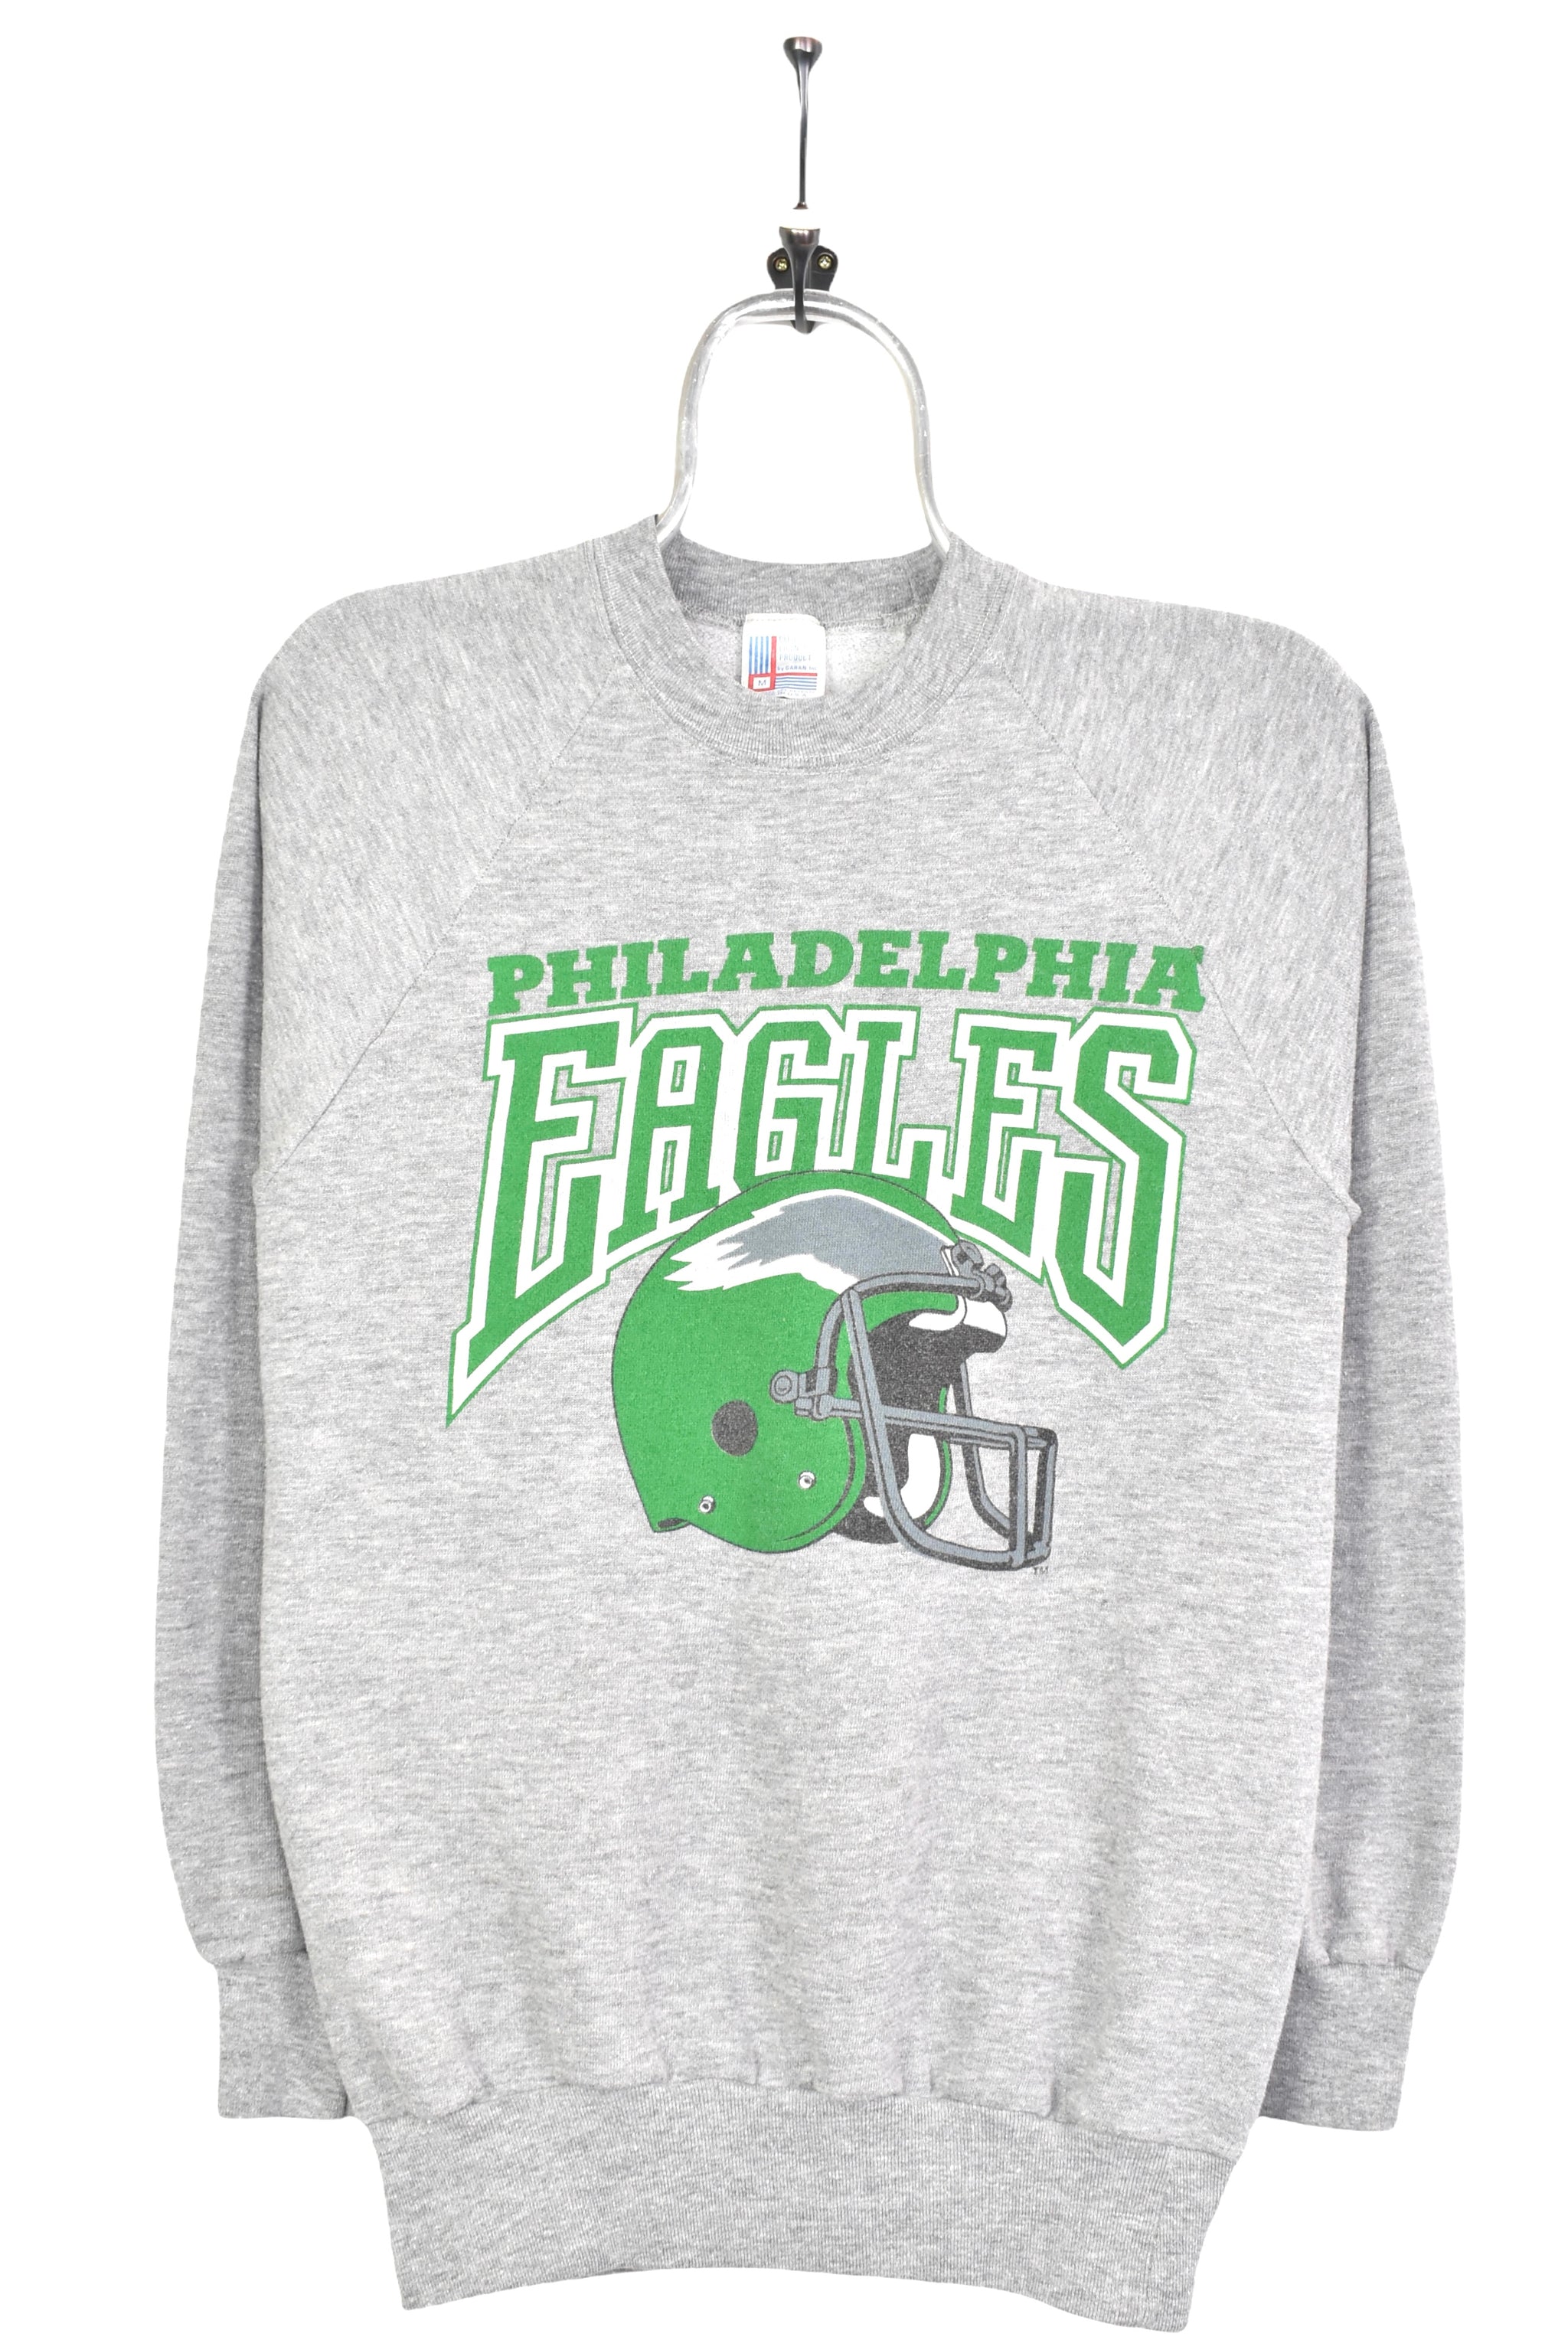 Vintage 80's Philadelphia Eagles White Crewneck Sweatshirt Adult Size XL